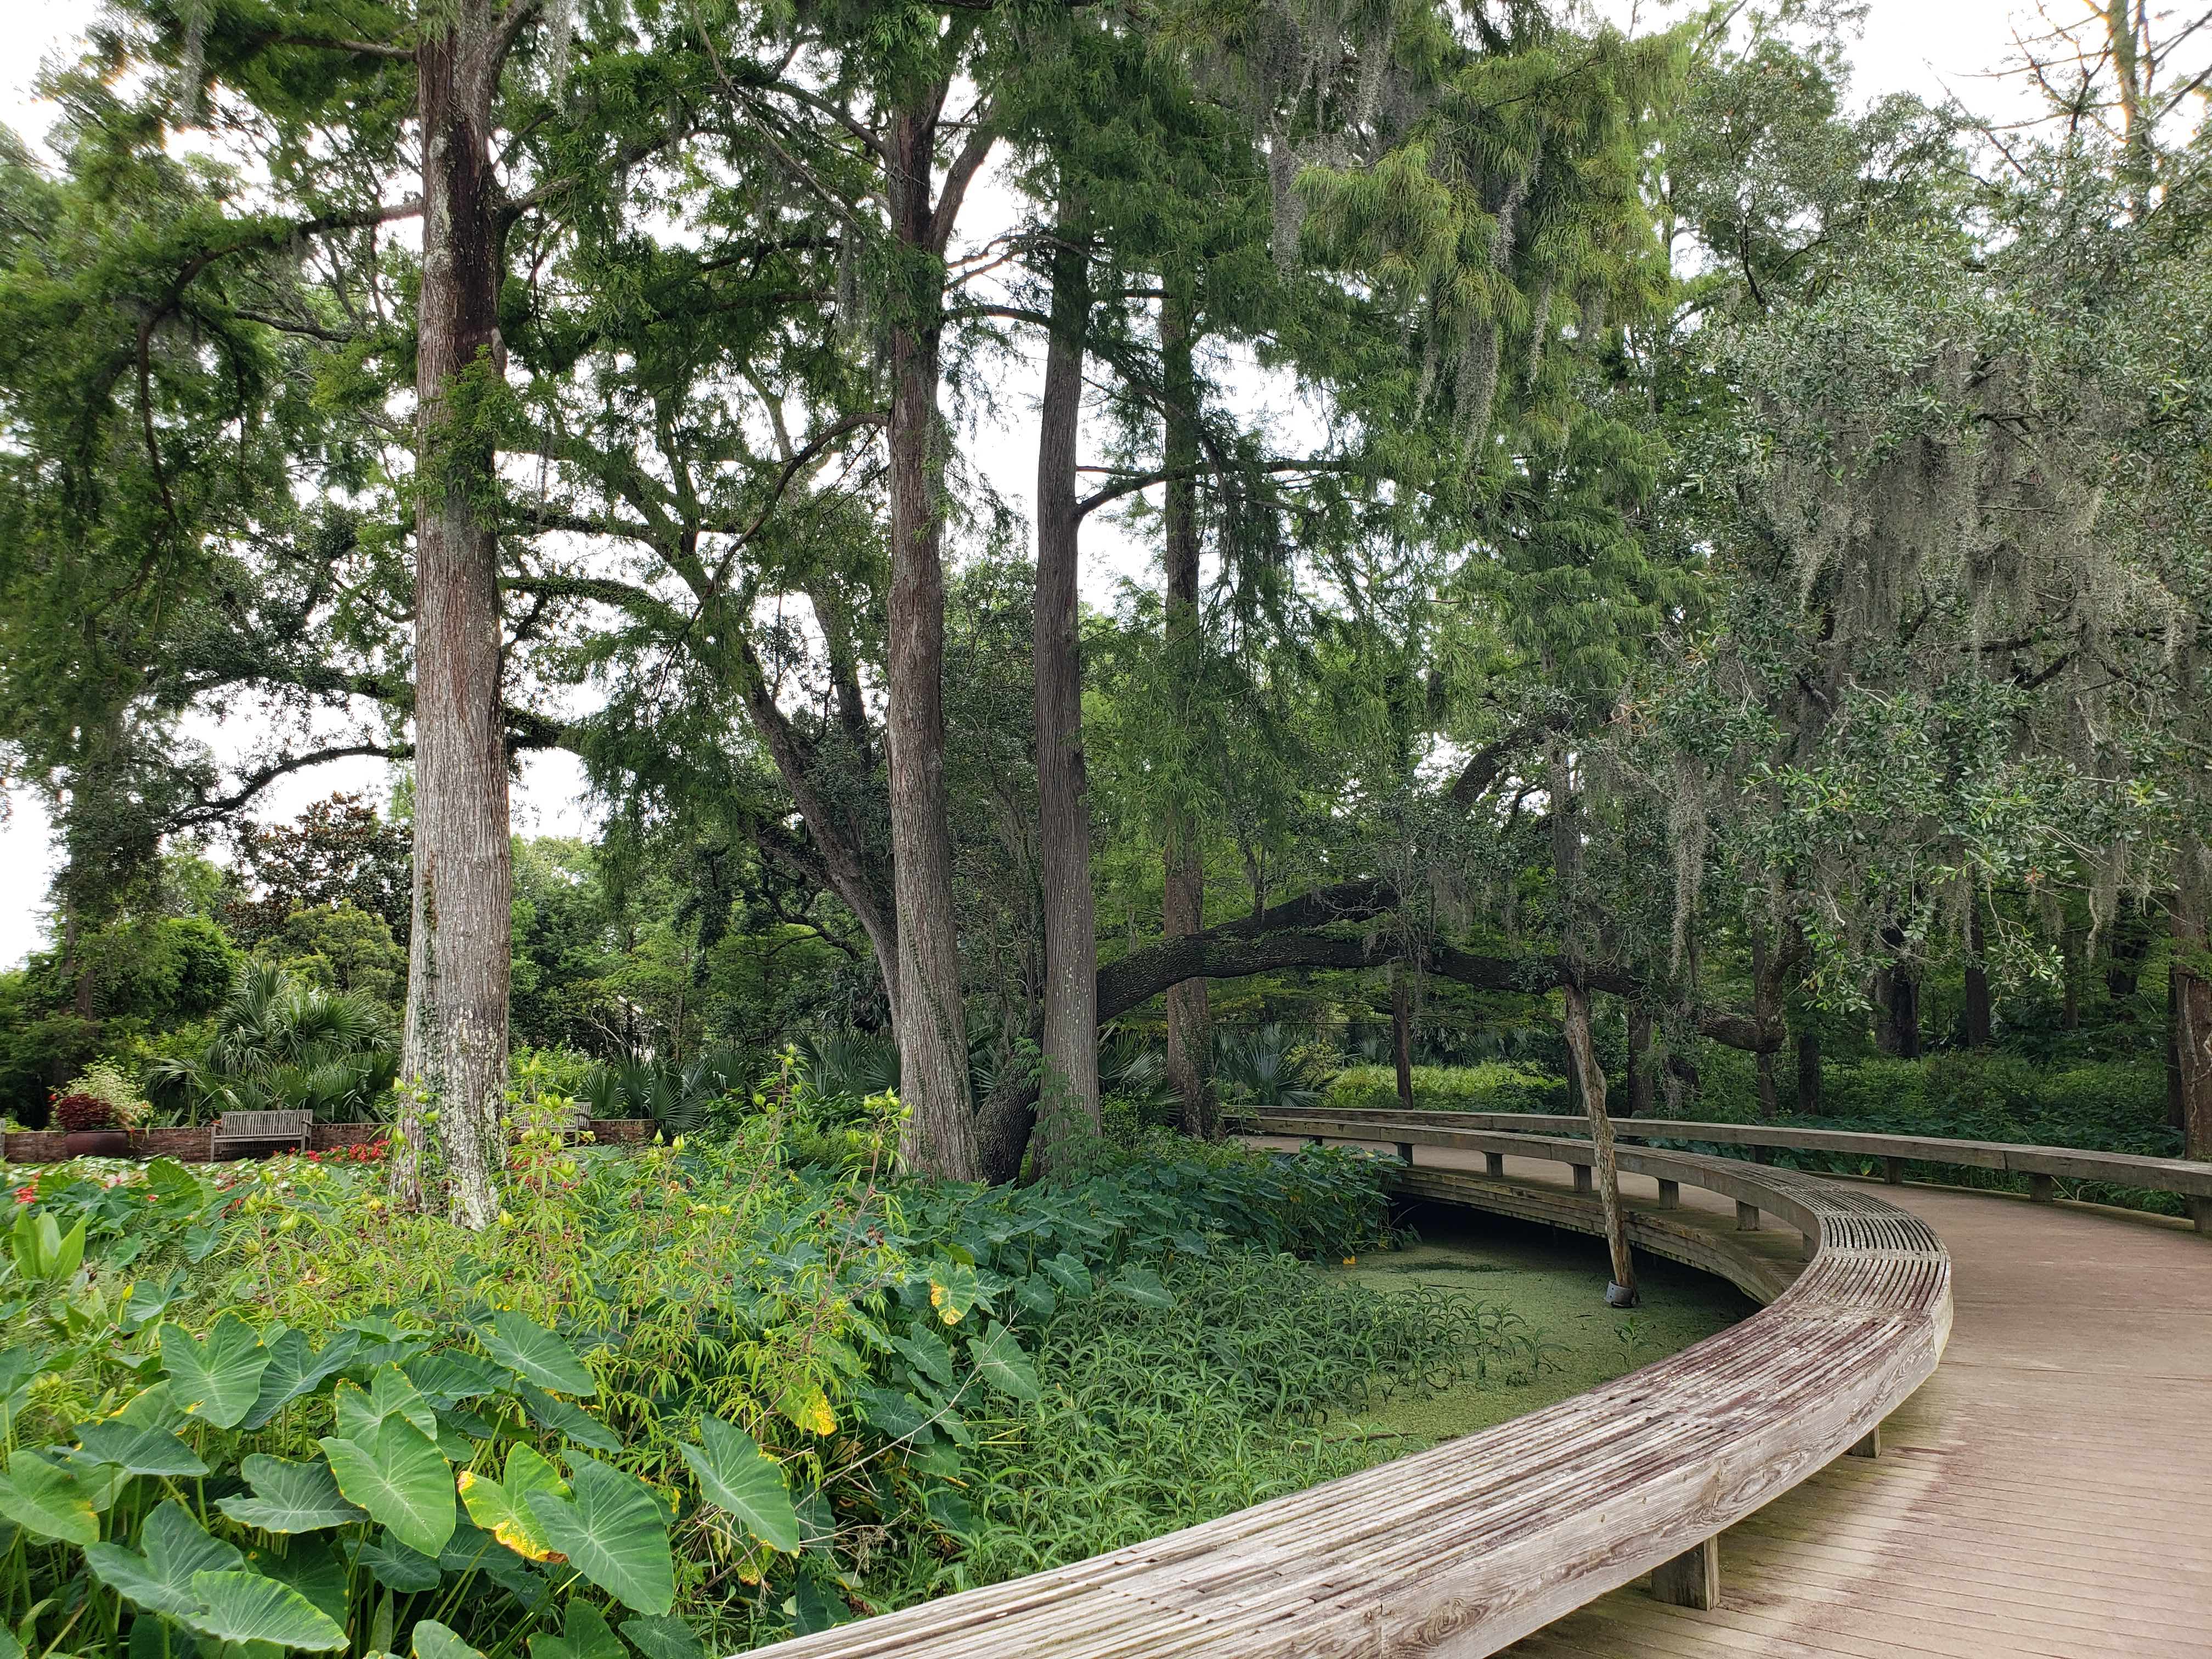 Trees shade a path at Shangri La Botanical Gardens & Nature Center.